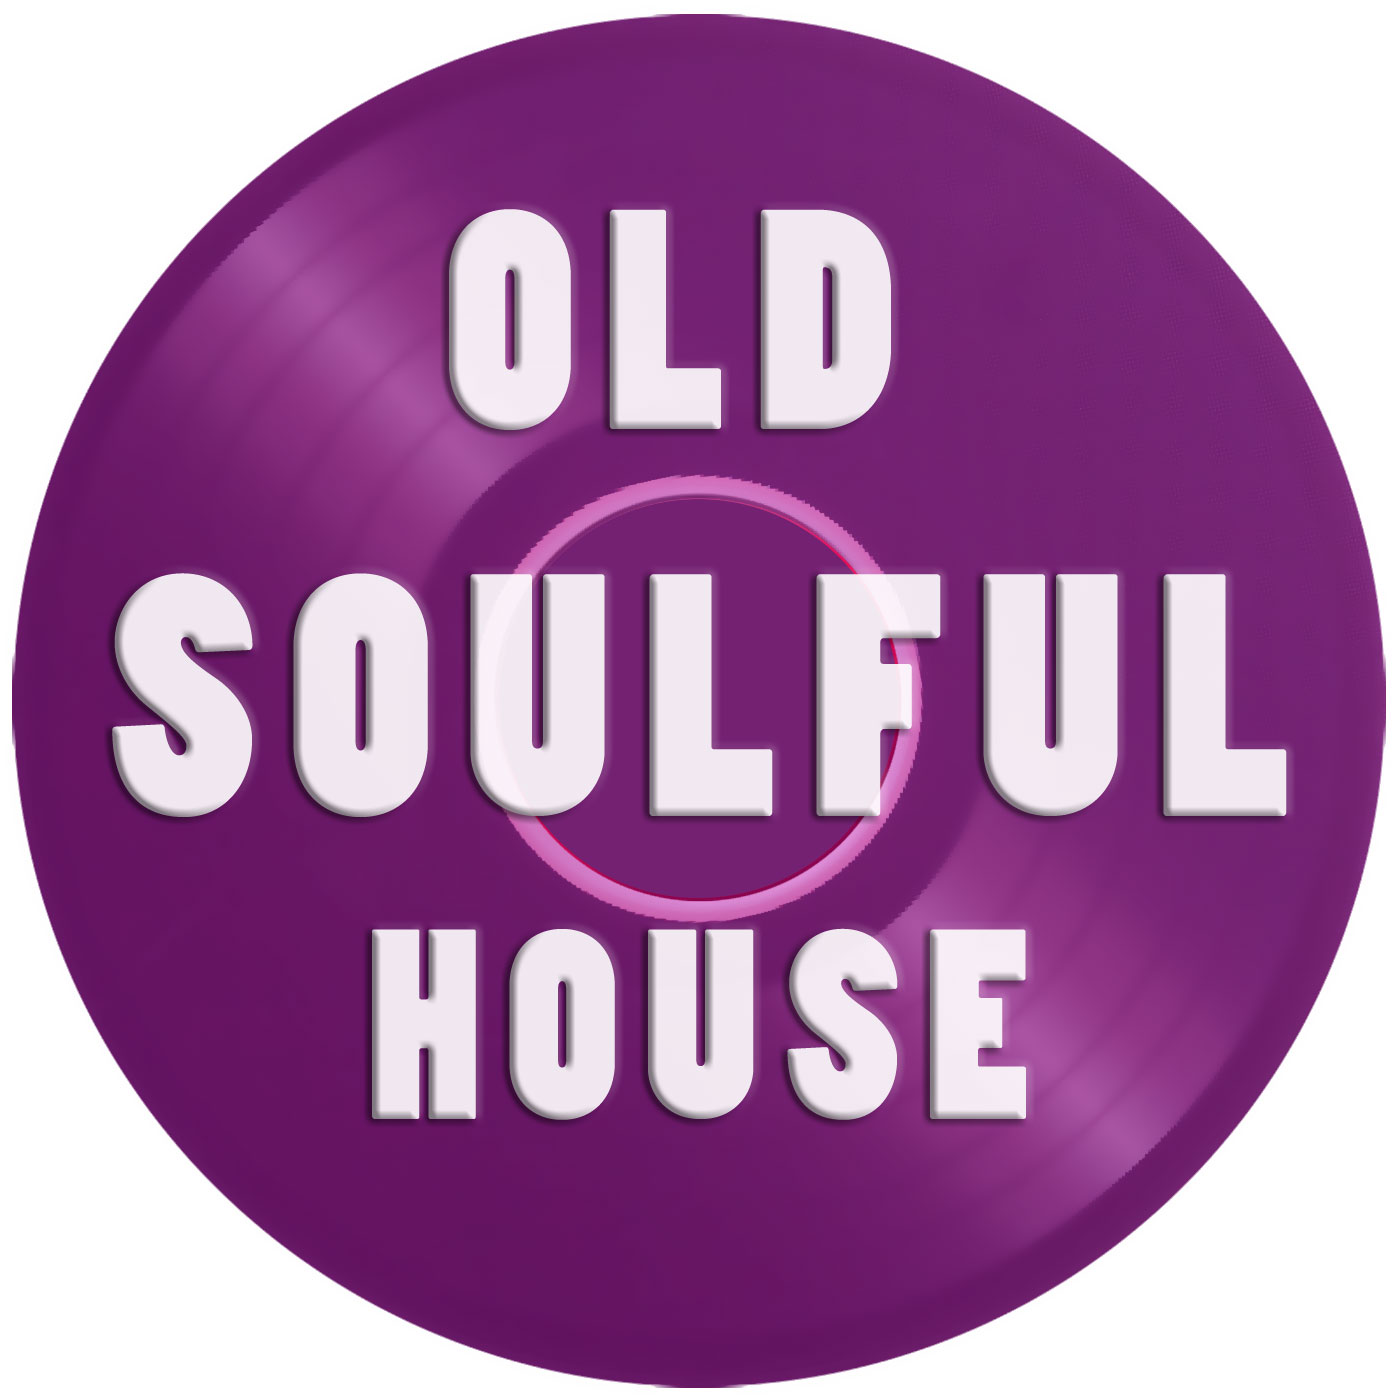 Radionomy – Old Soulful House Music | free online radio station